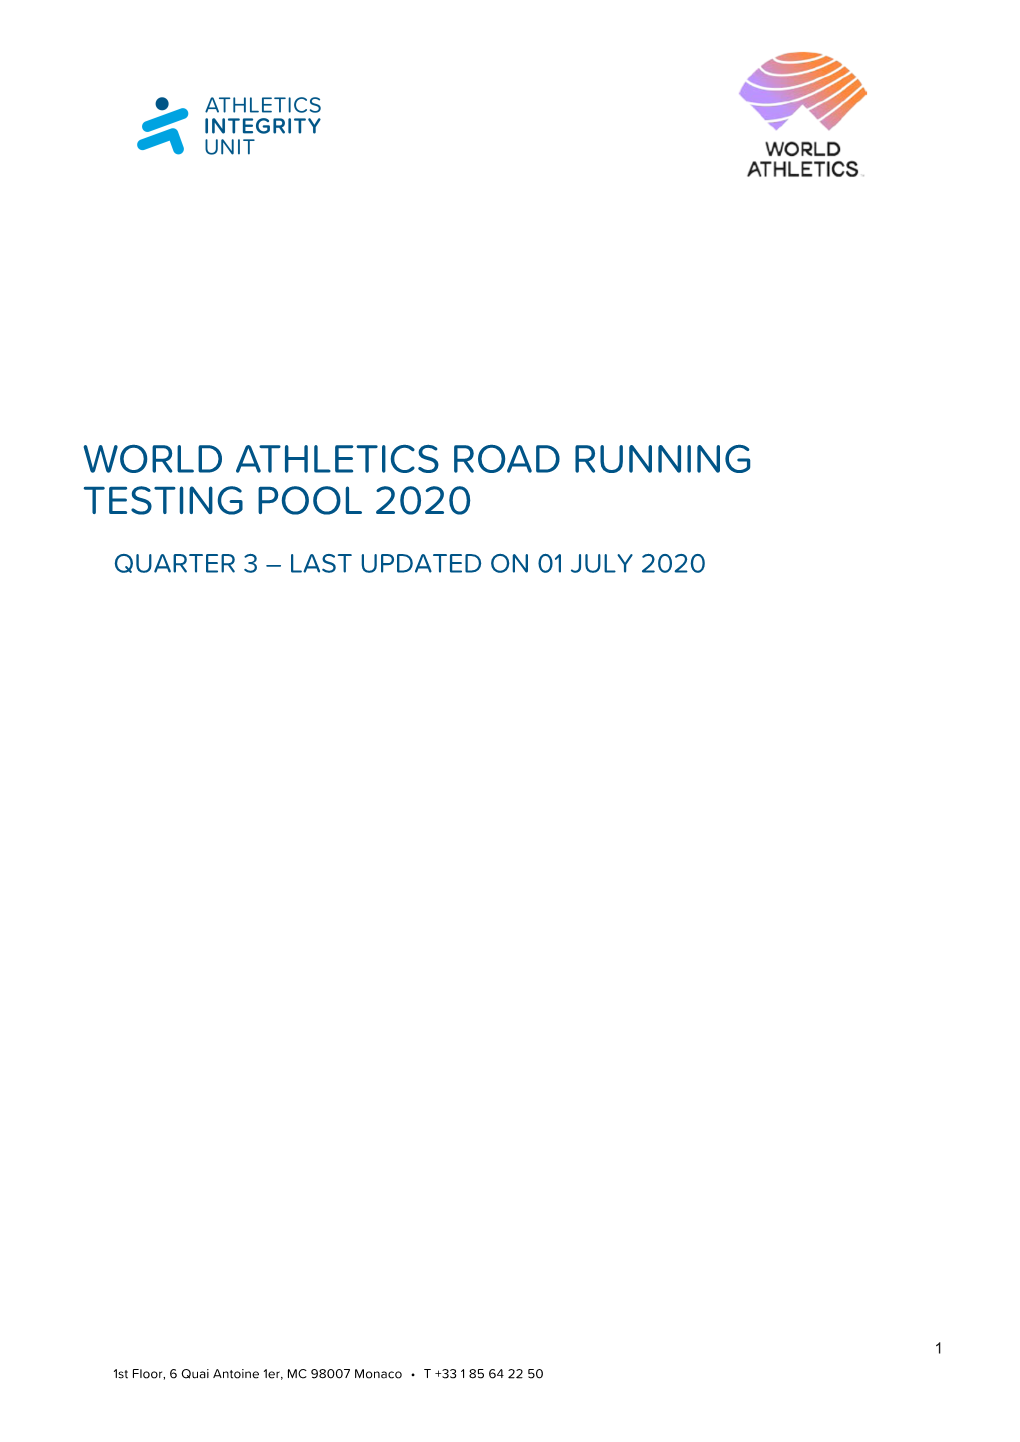 World Athletics Road Running Testing Pool 2020